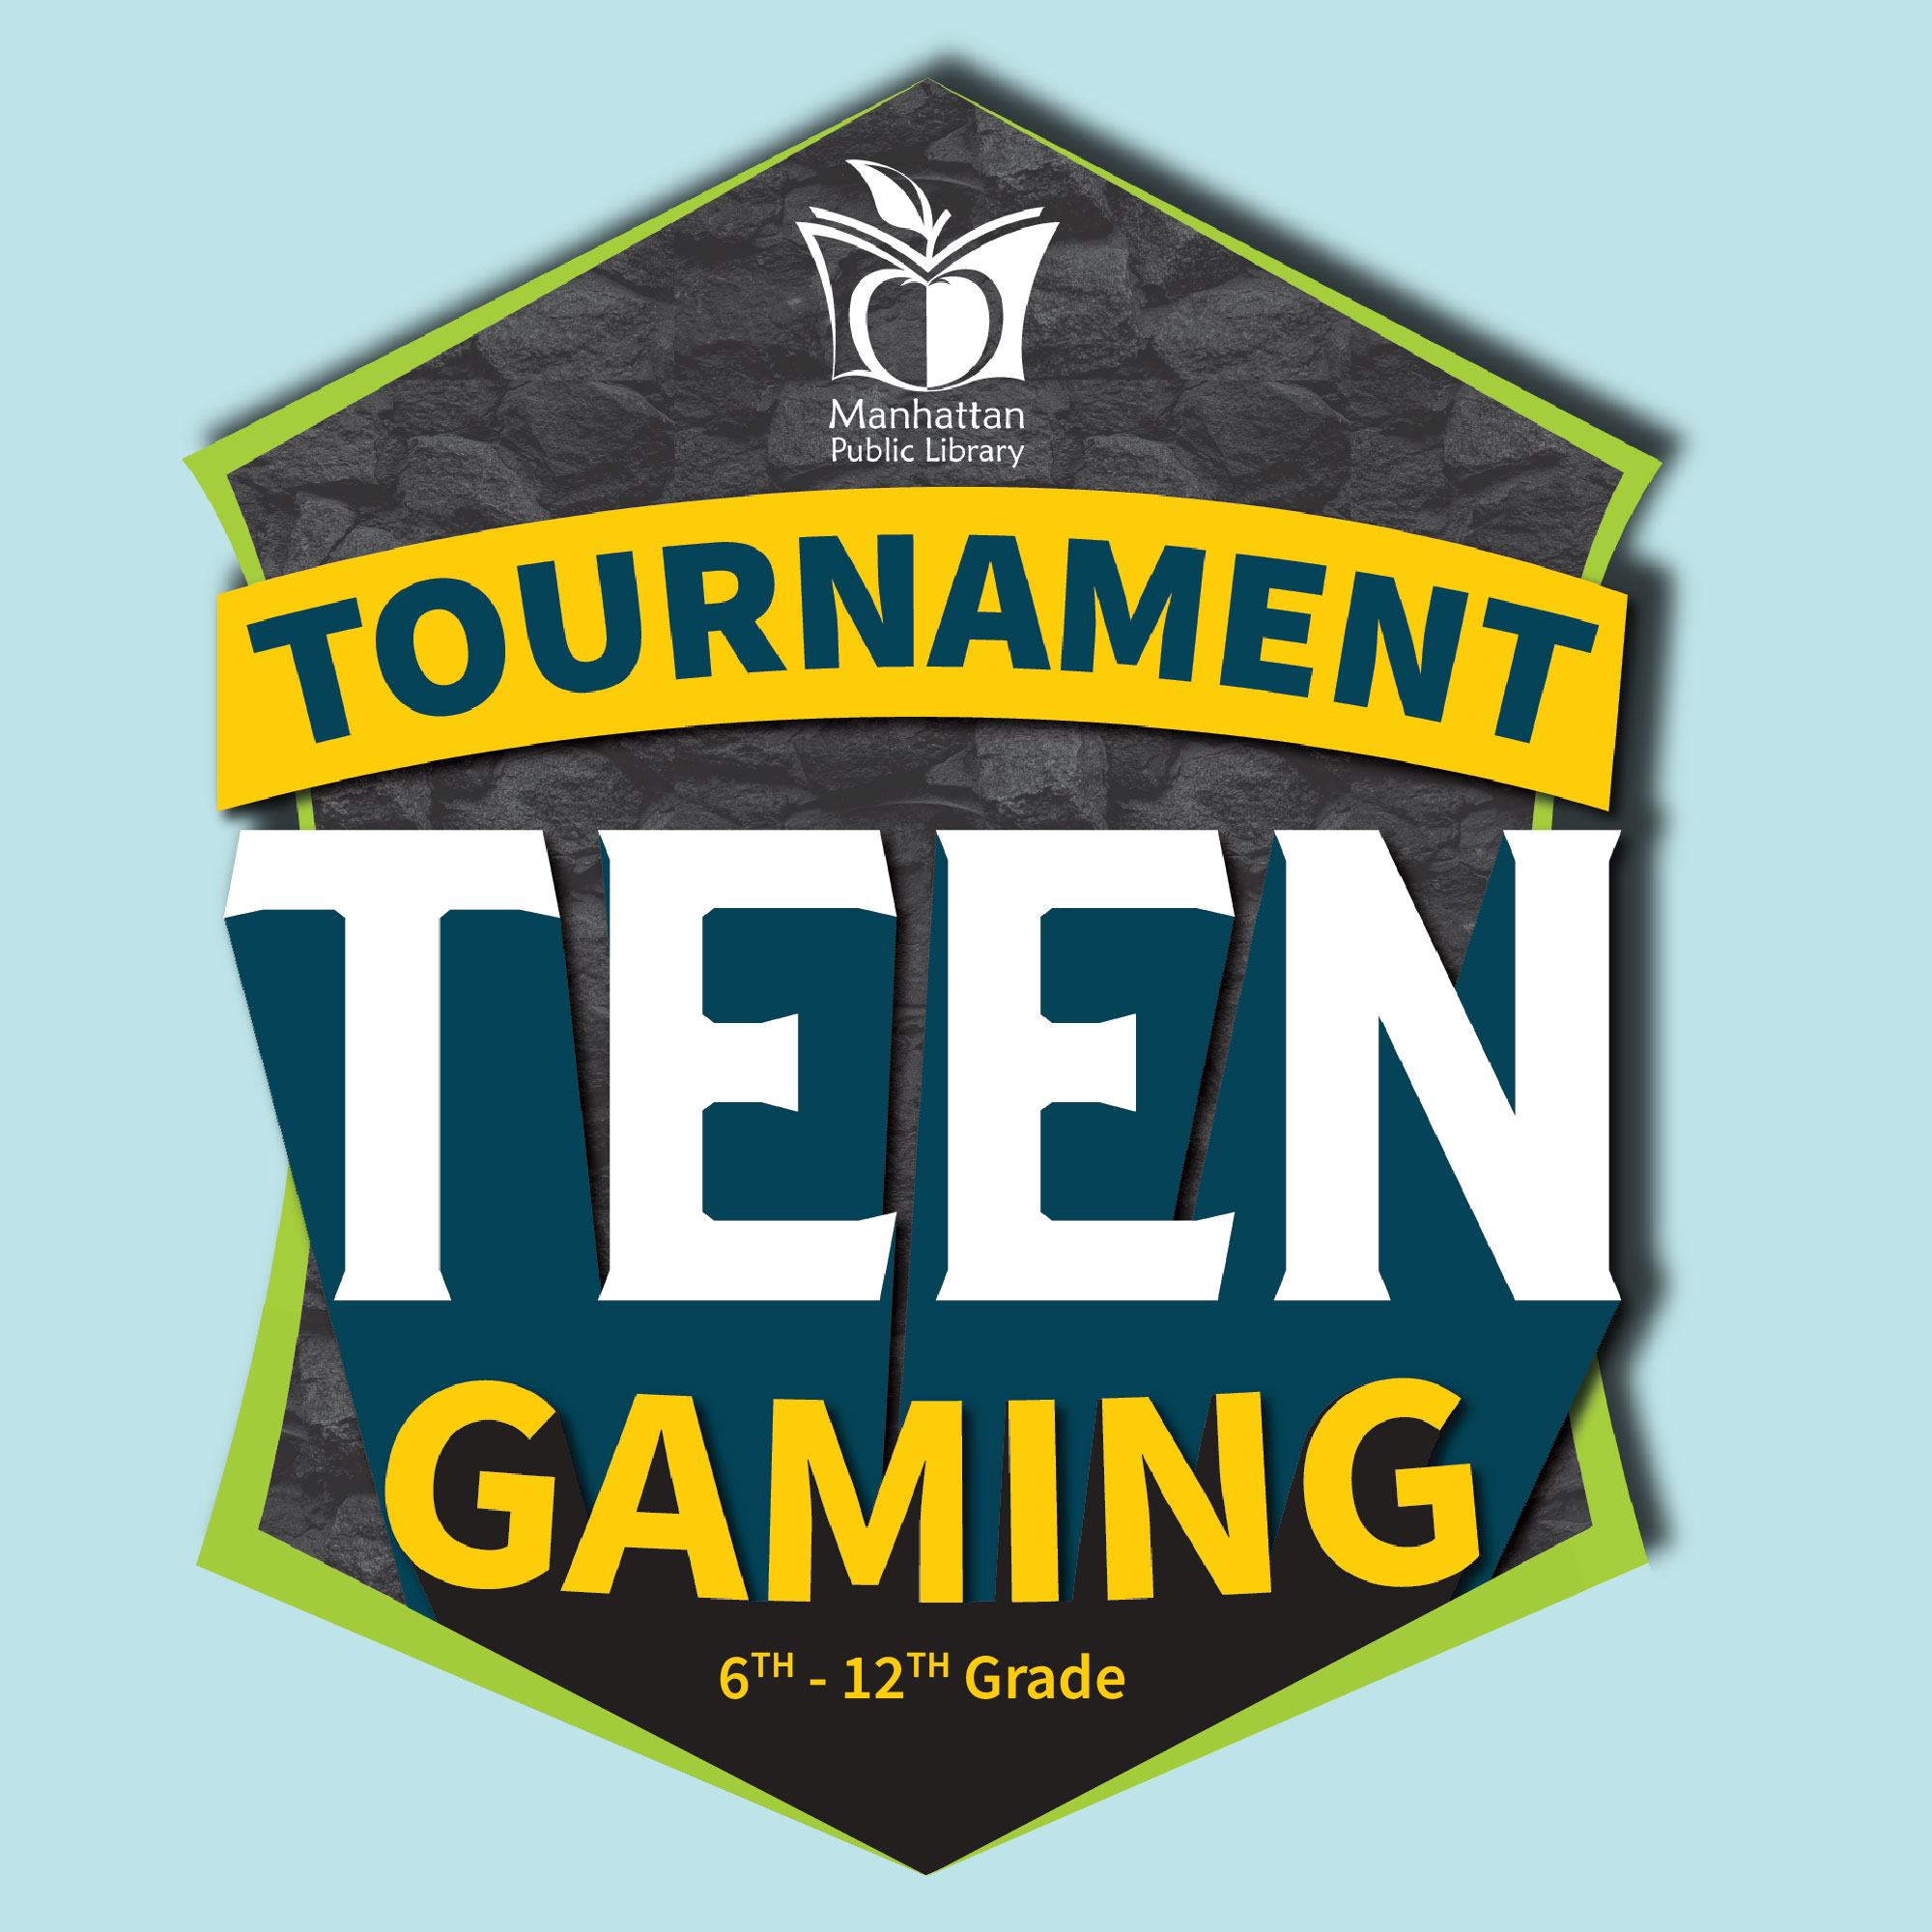 Tournament Teen Gaming